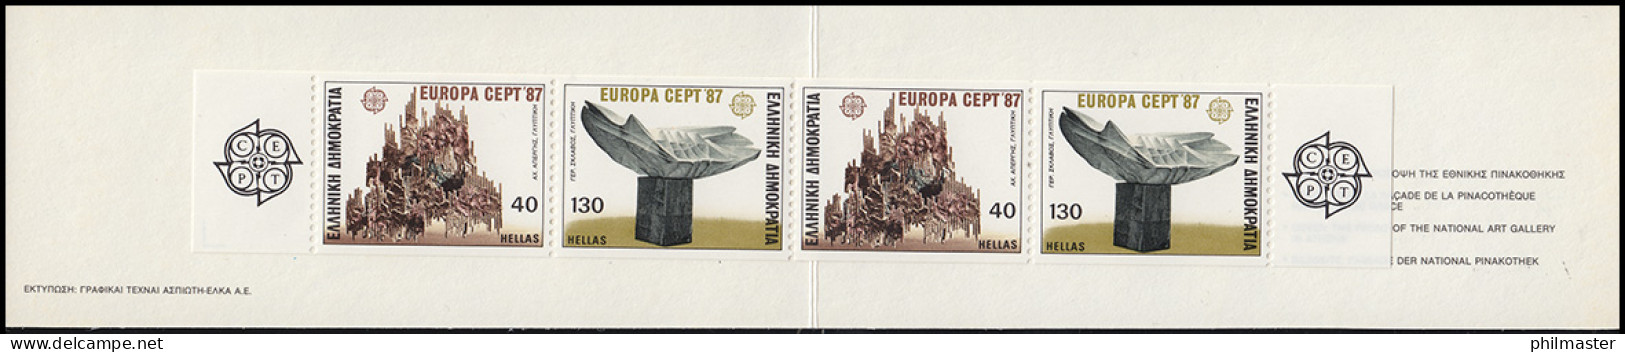 Griechenland Markenheftchen 6 Europa 1987, ** Postfrisch - Carnets